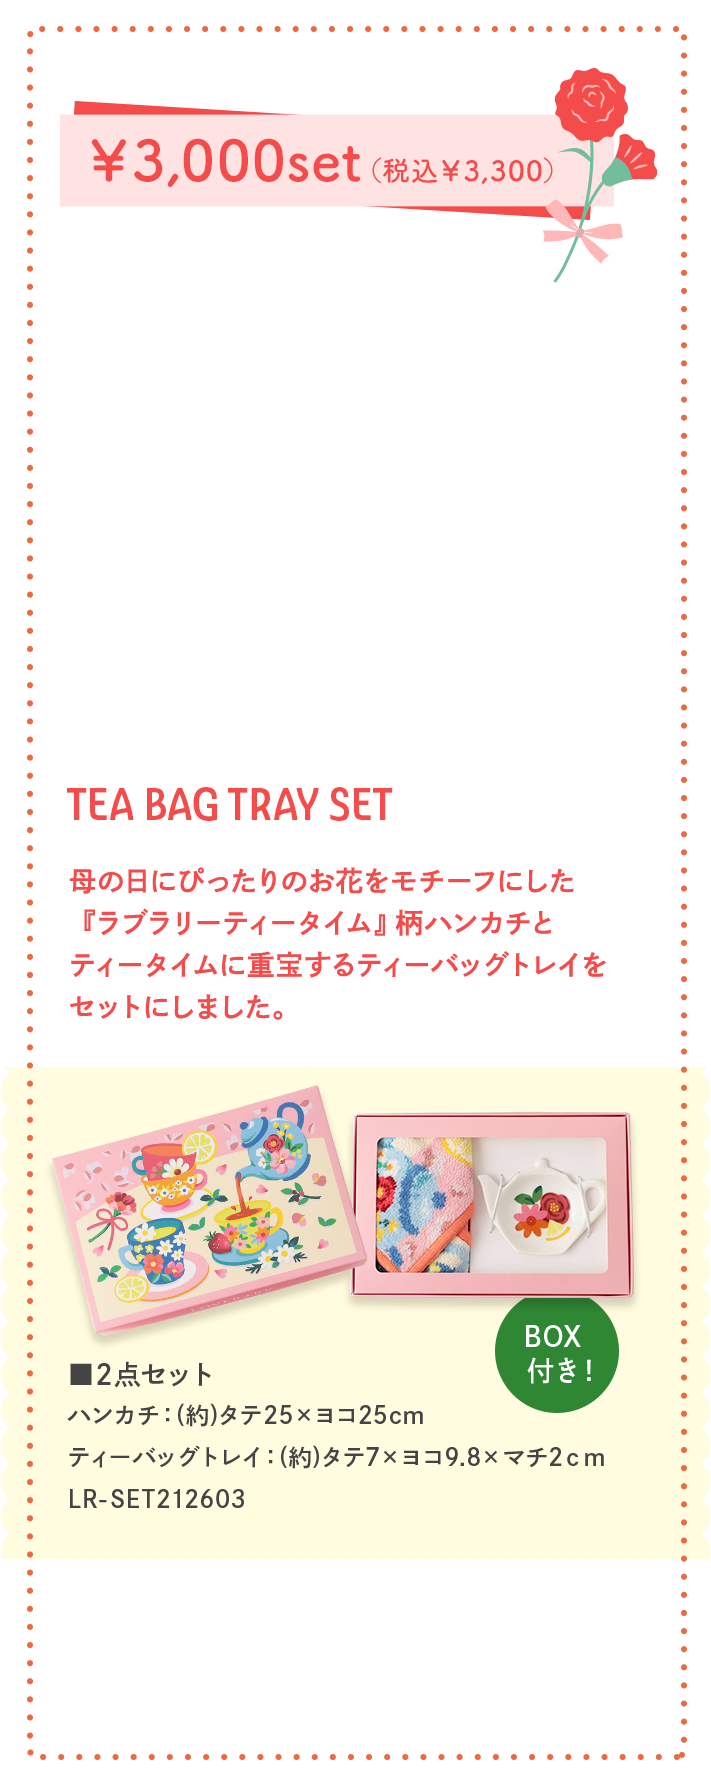 TEA BAG TRAY SET